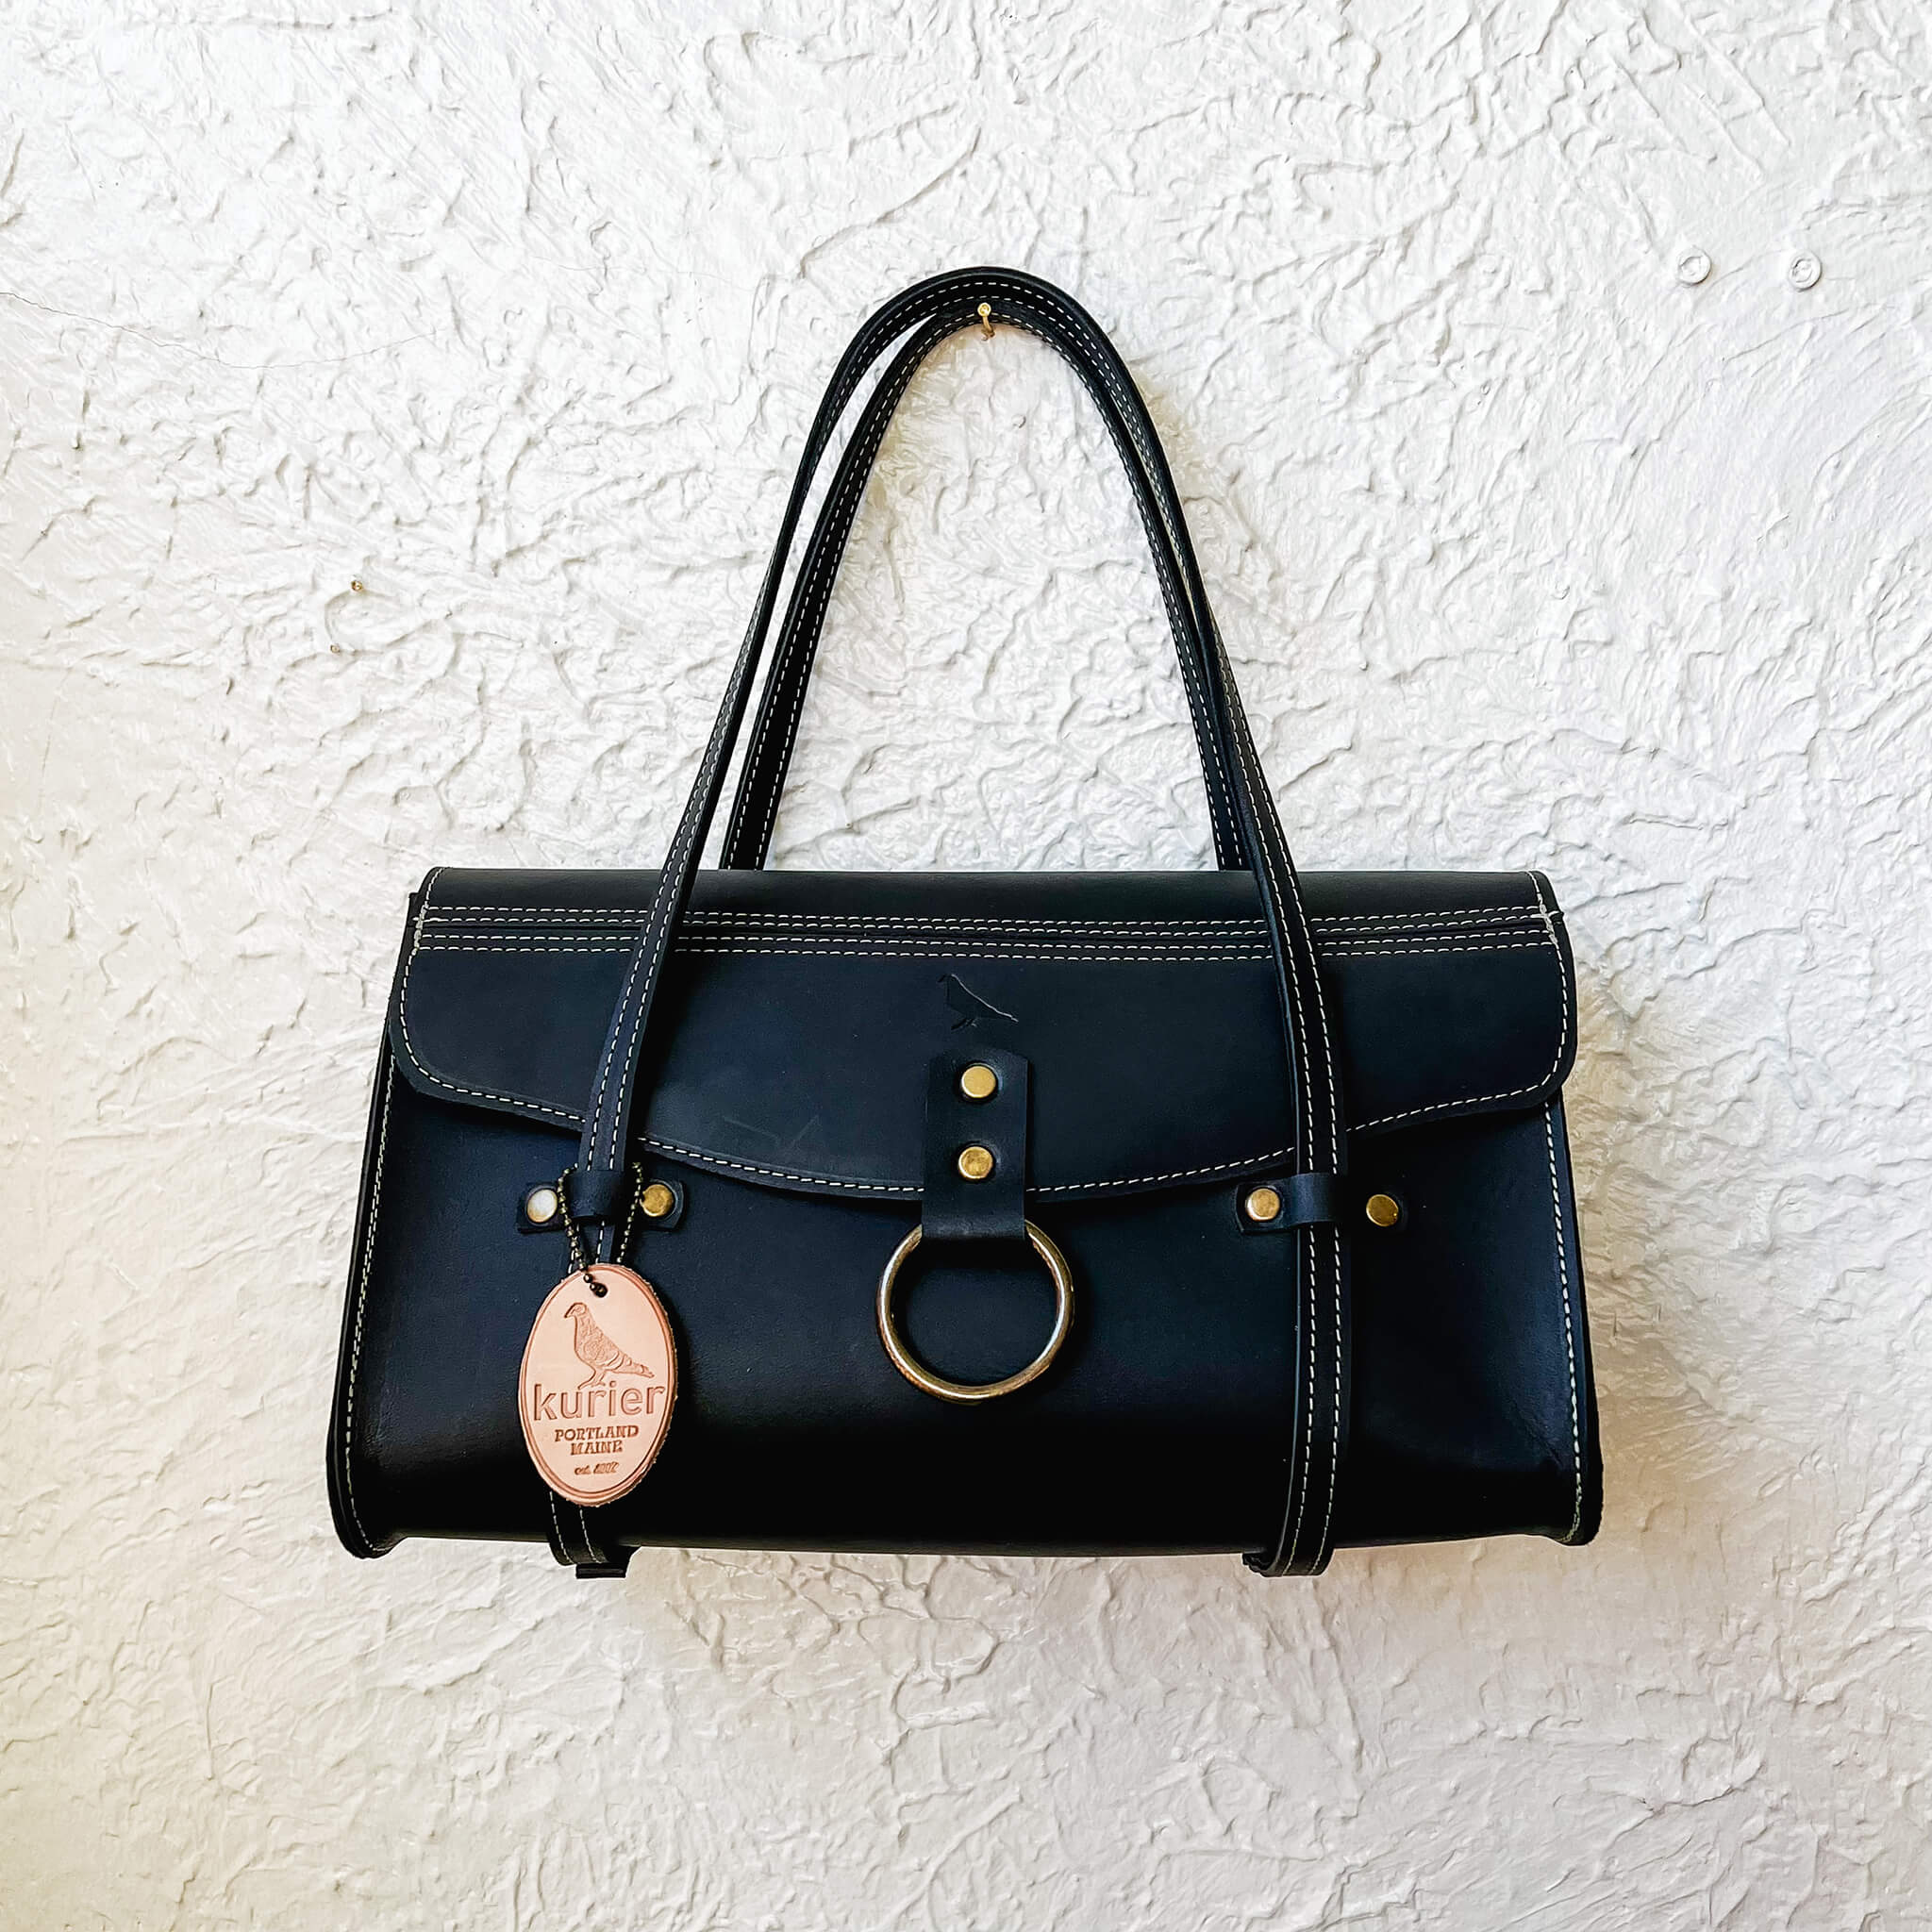 gabrielle handbag - handmade leather - black front view